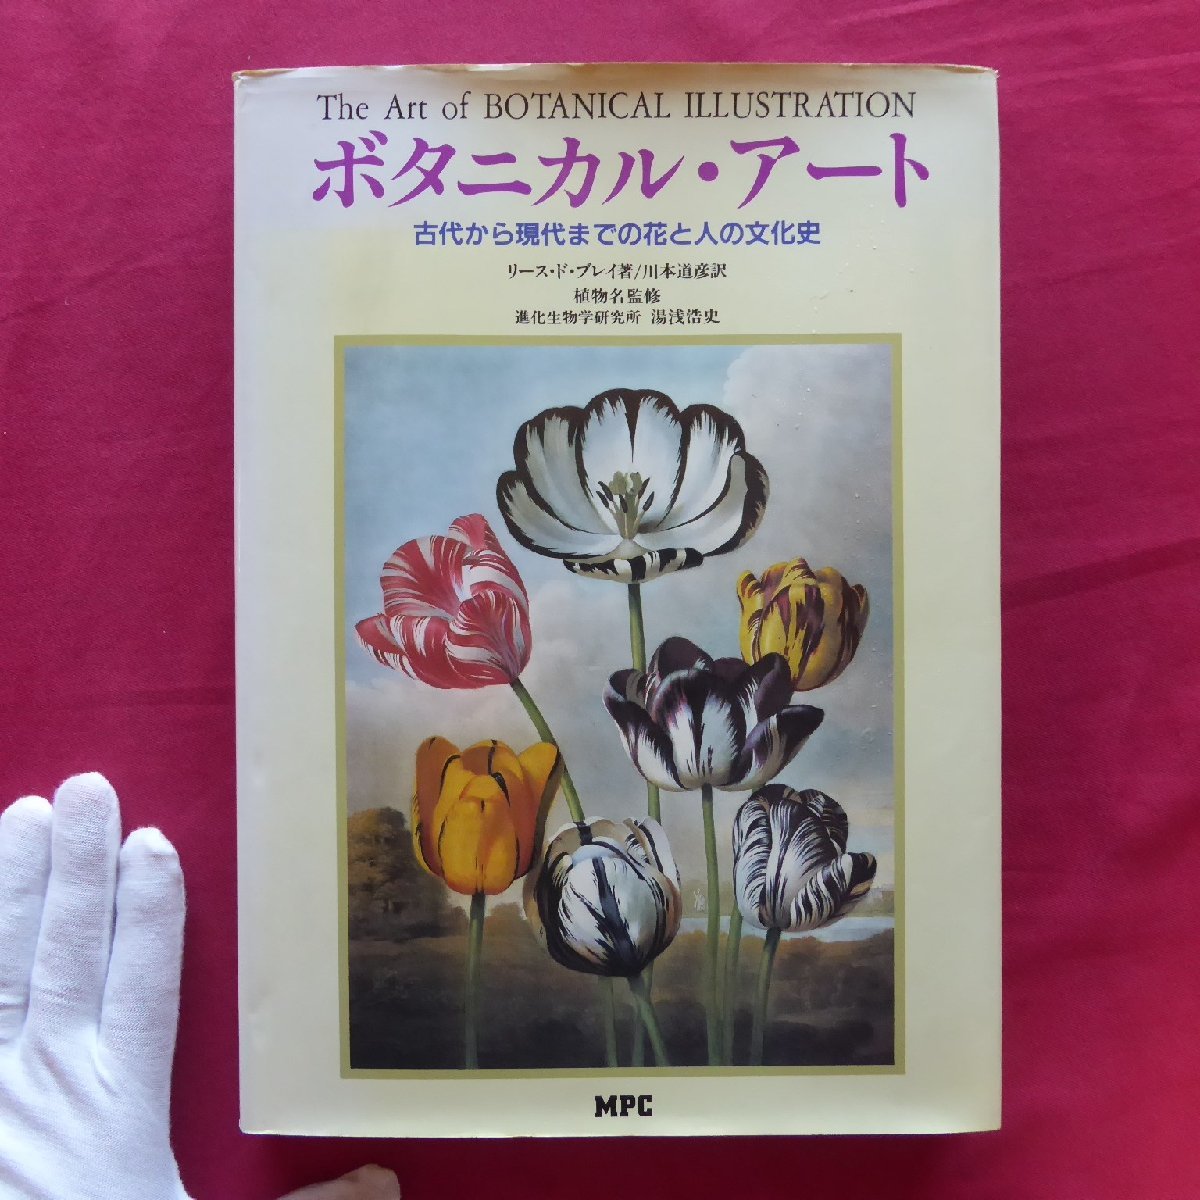 z31/Lys de Bray [식물 예술 - 고대부터 현재까지 꽃과 사람의 문화사/MPC/1990] Linnaeus/Botanical Illustration, 그림, 그림책, 수집, 그림책